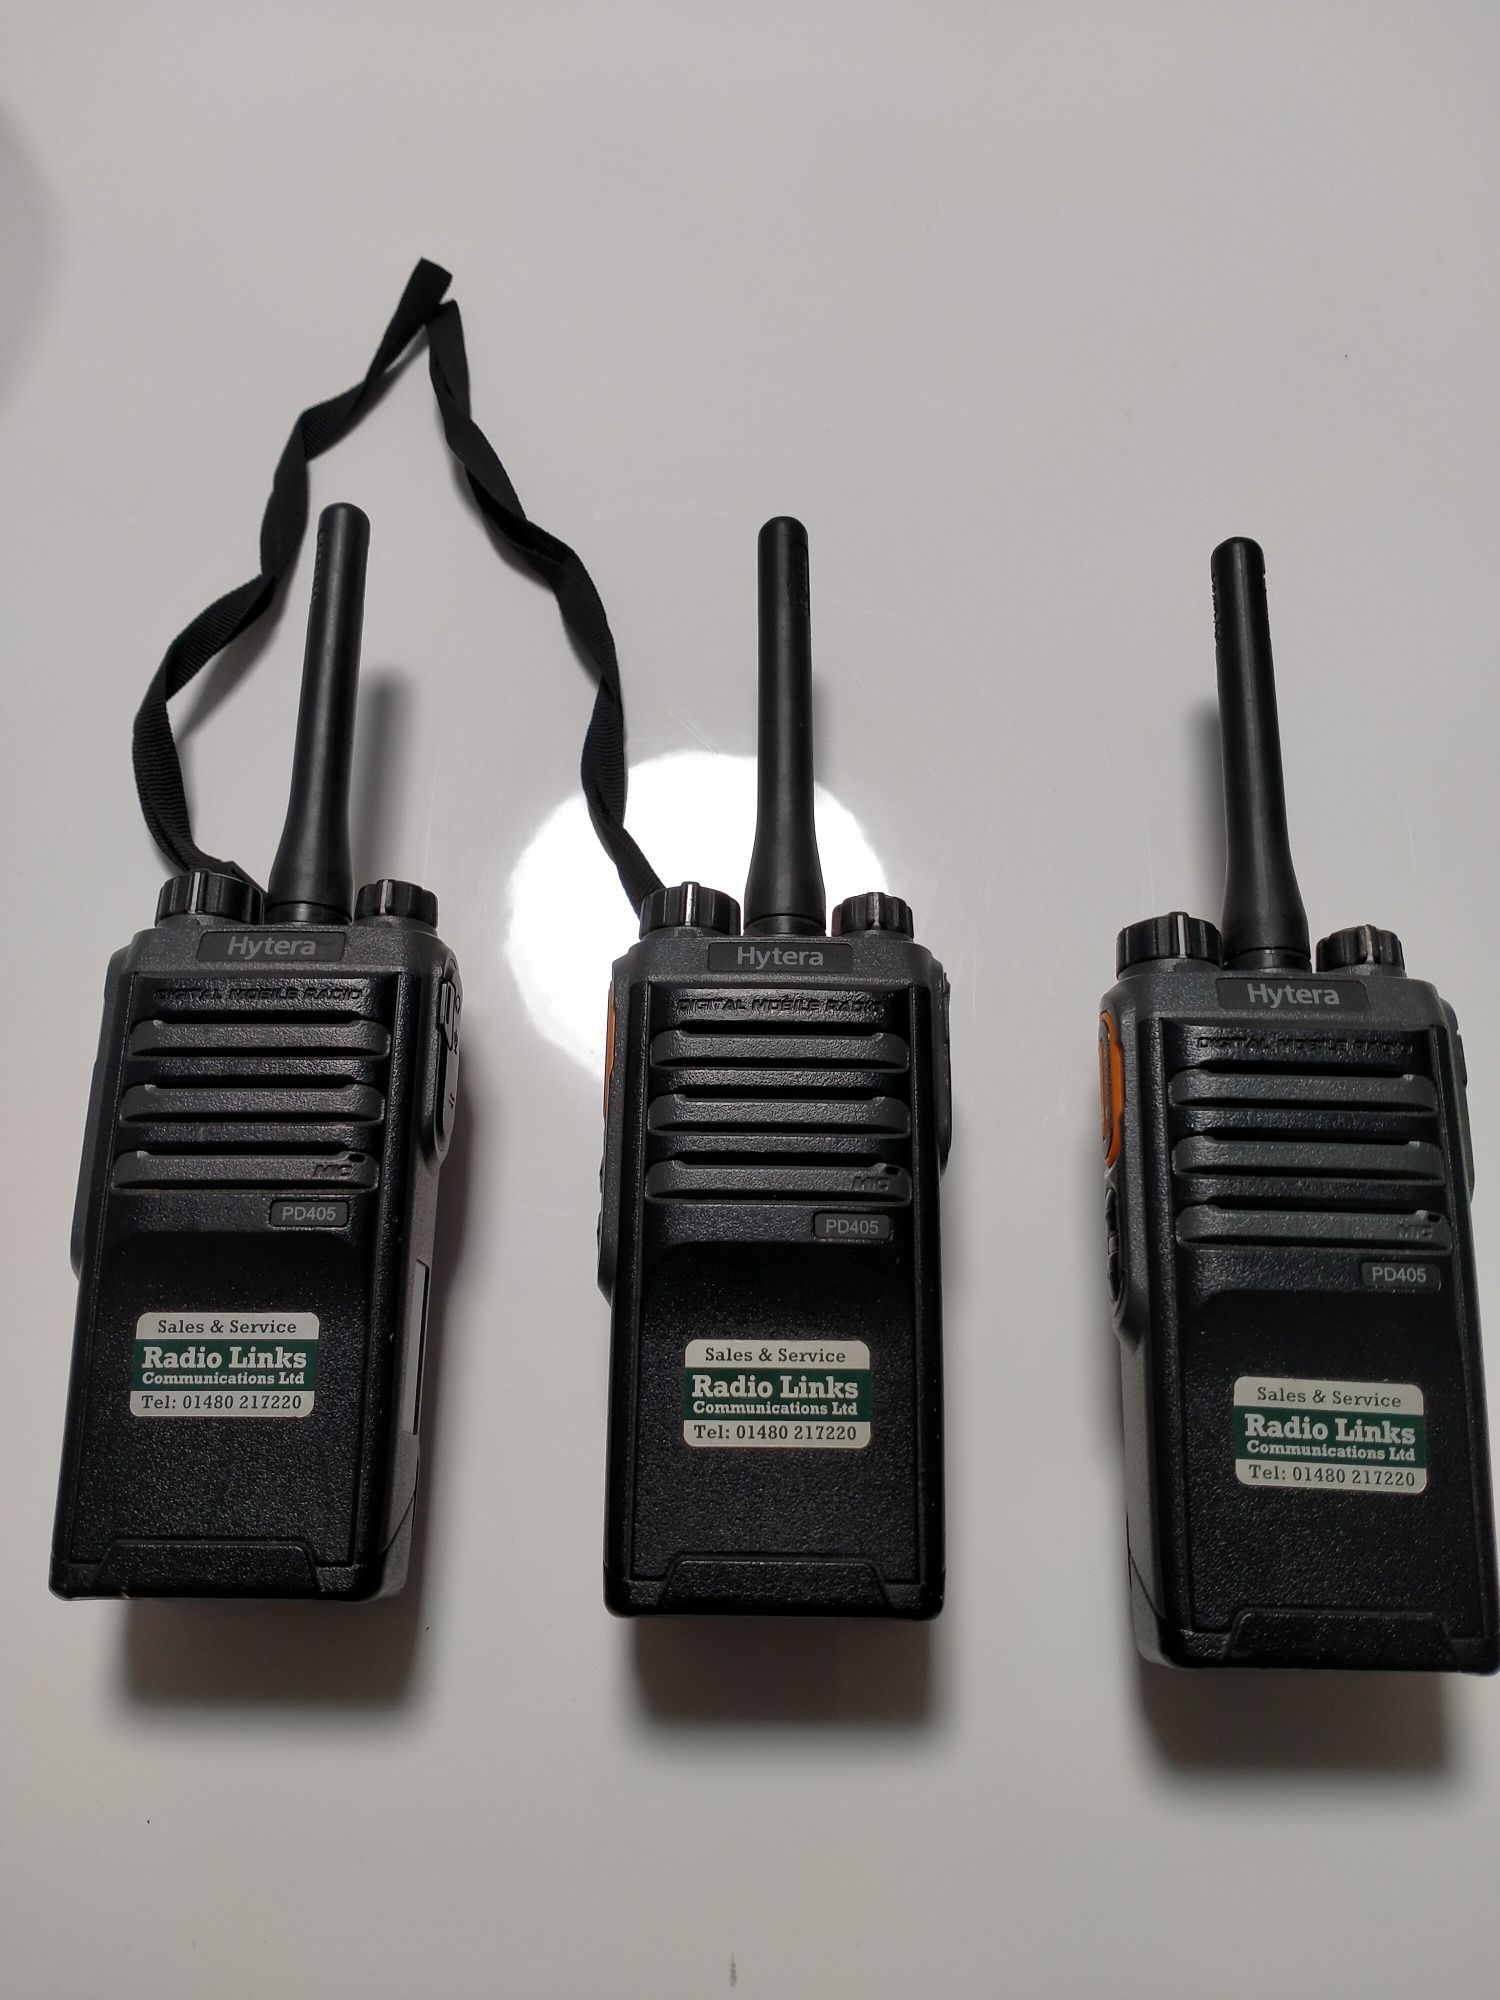 Hytera PD405 Radiotelefon przenośny 3 sztuki plus ładowarka